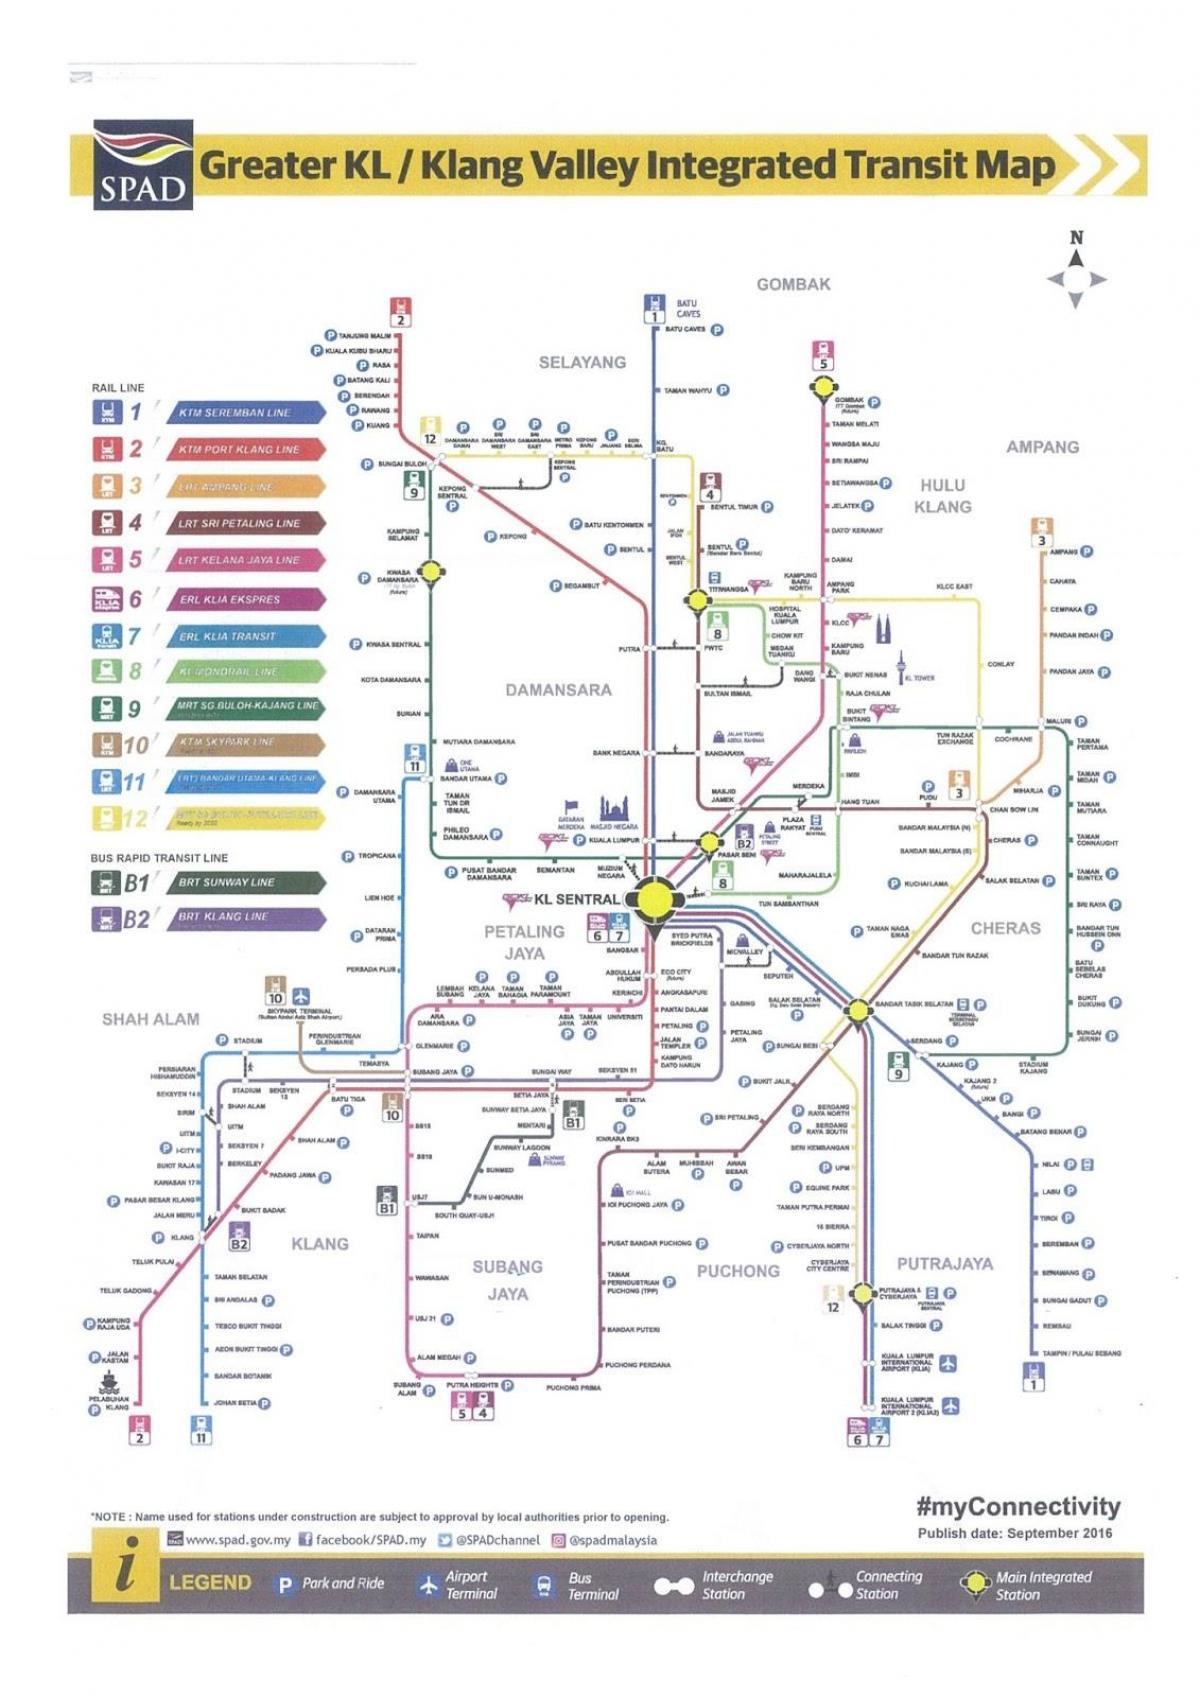 kuala lumpur transit demiryolu haritası